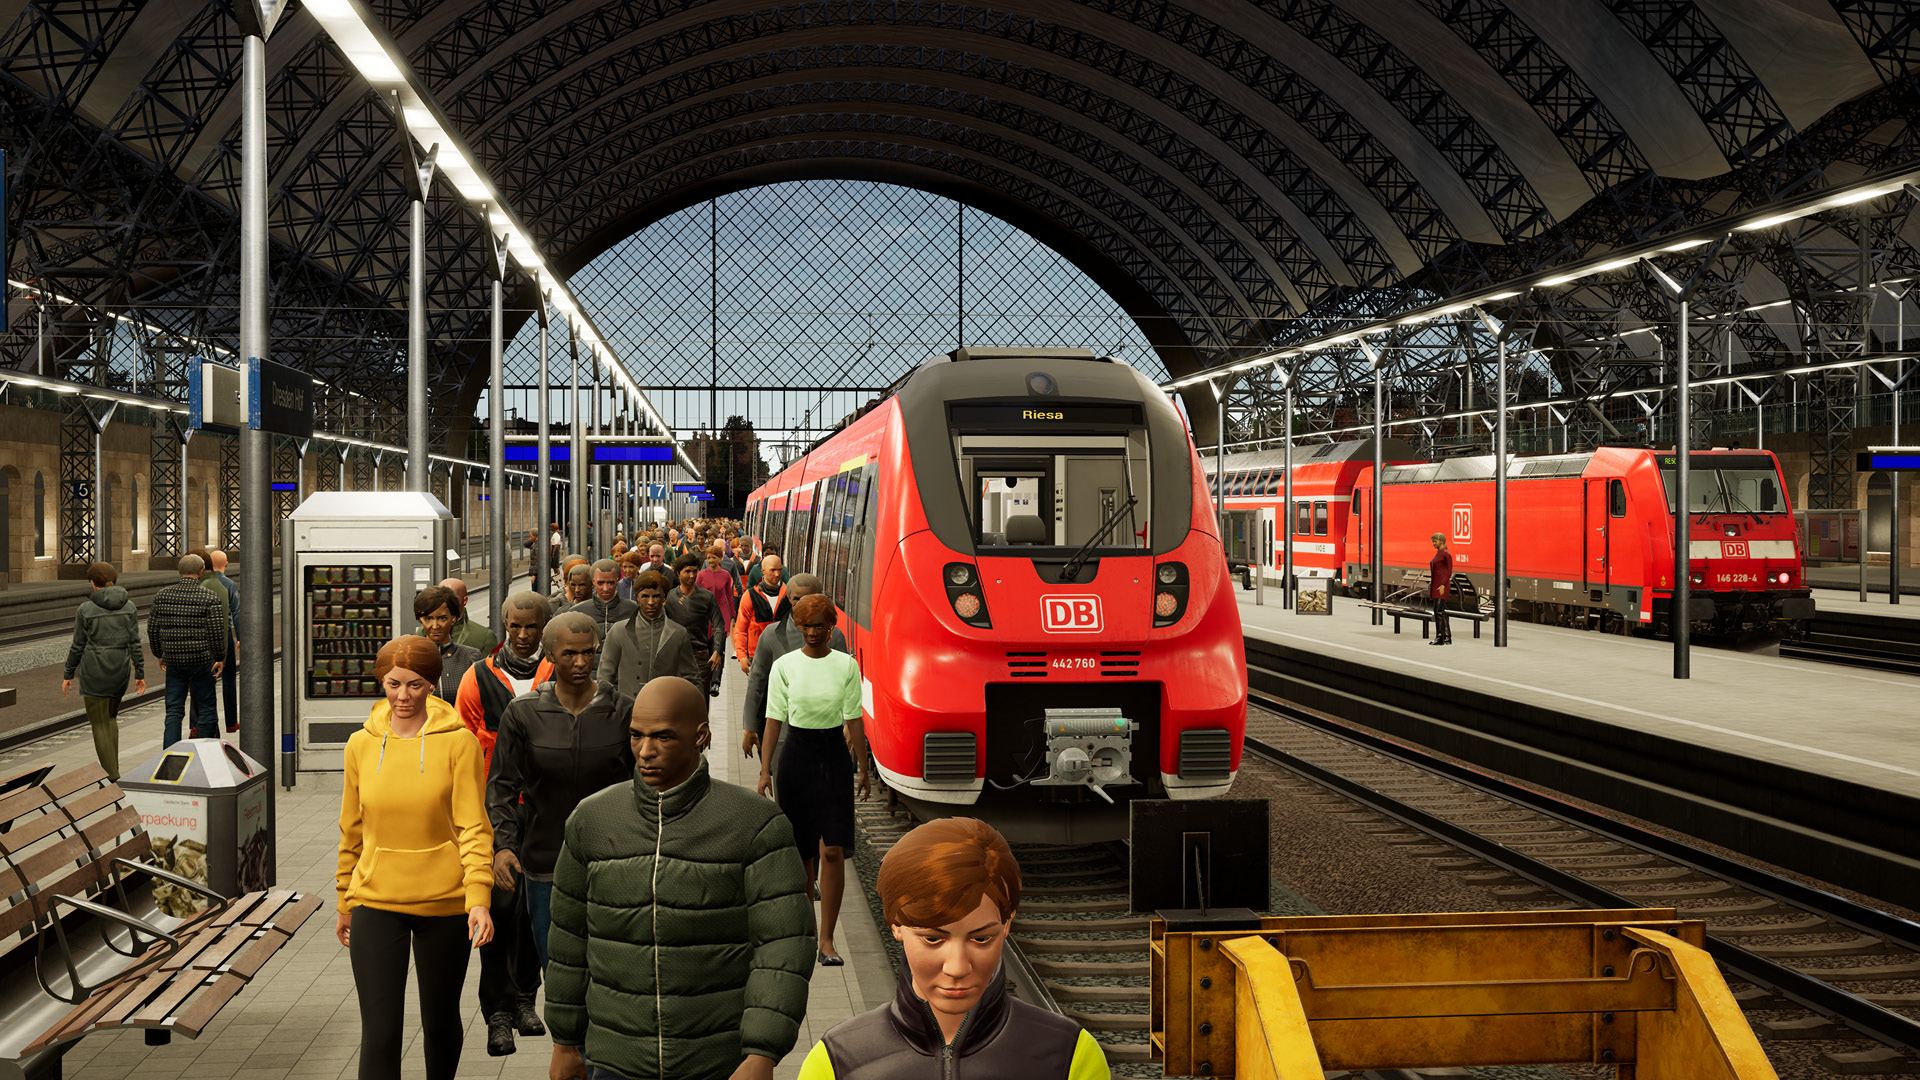 Train Sim World 2021 Wallpapers